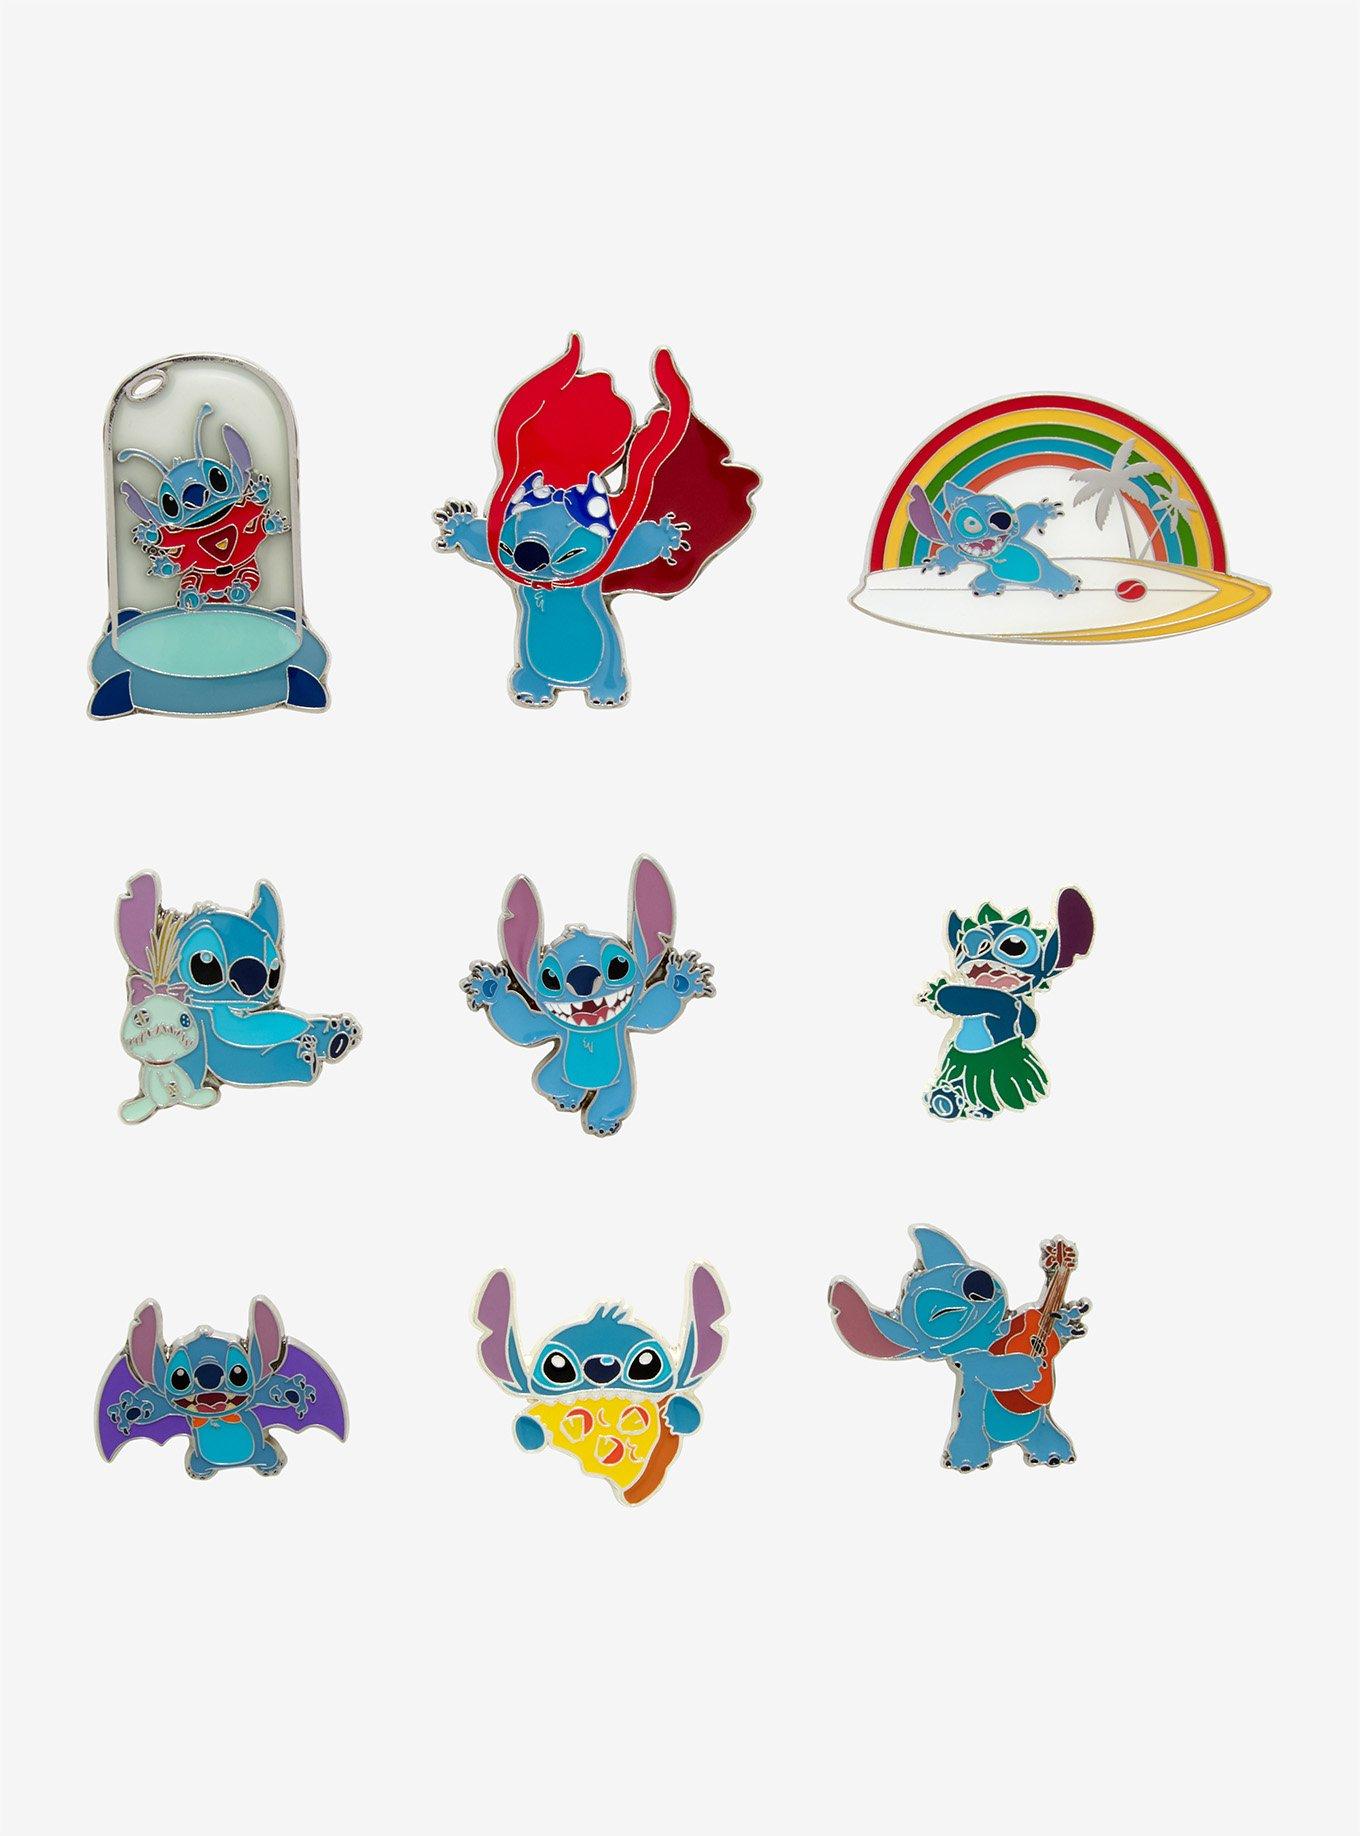 Lilo & Stitch Scrump Fun Blind Box Pins at Hot Topic - Disney Pins